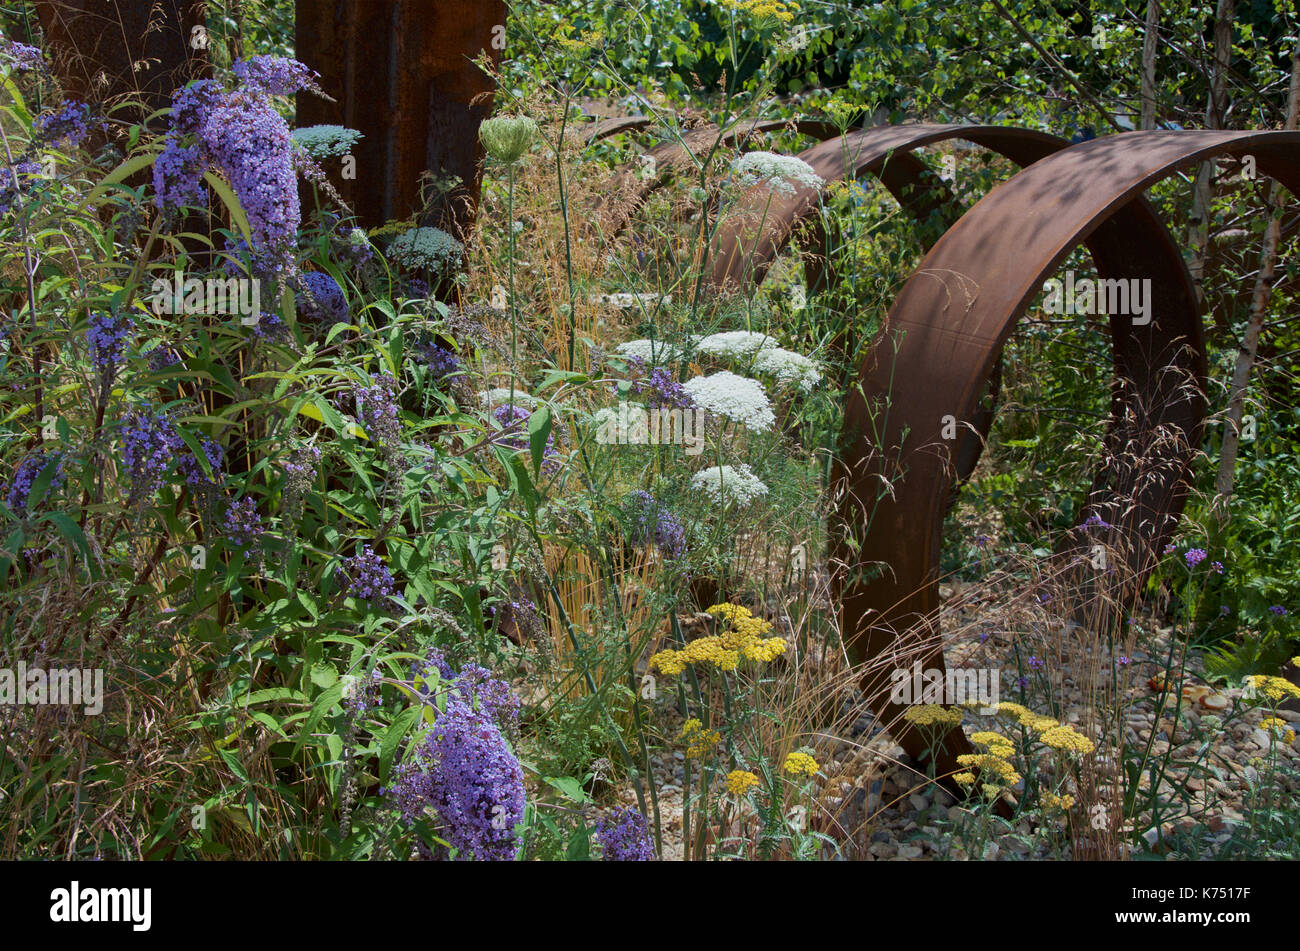 Brownfield - Metamorphosis garden at RHS Hampton Court Palace Flower Show 2017 Stock Photo